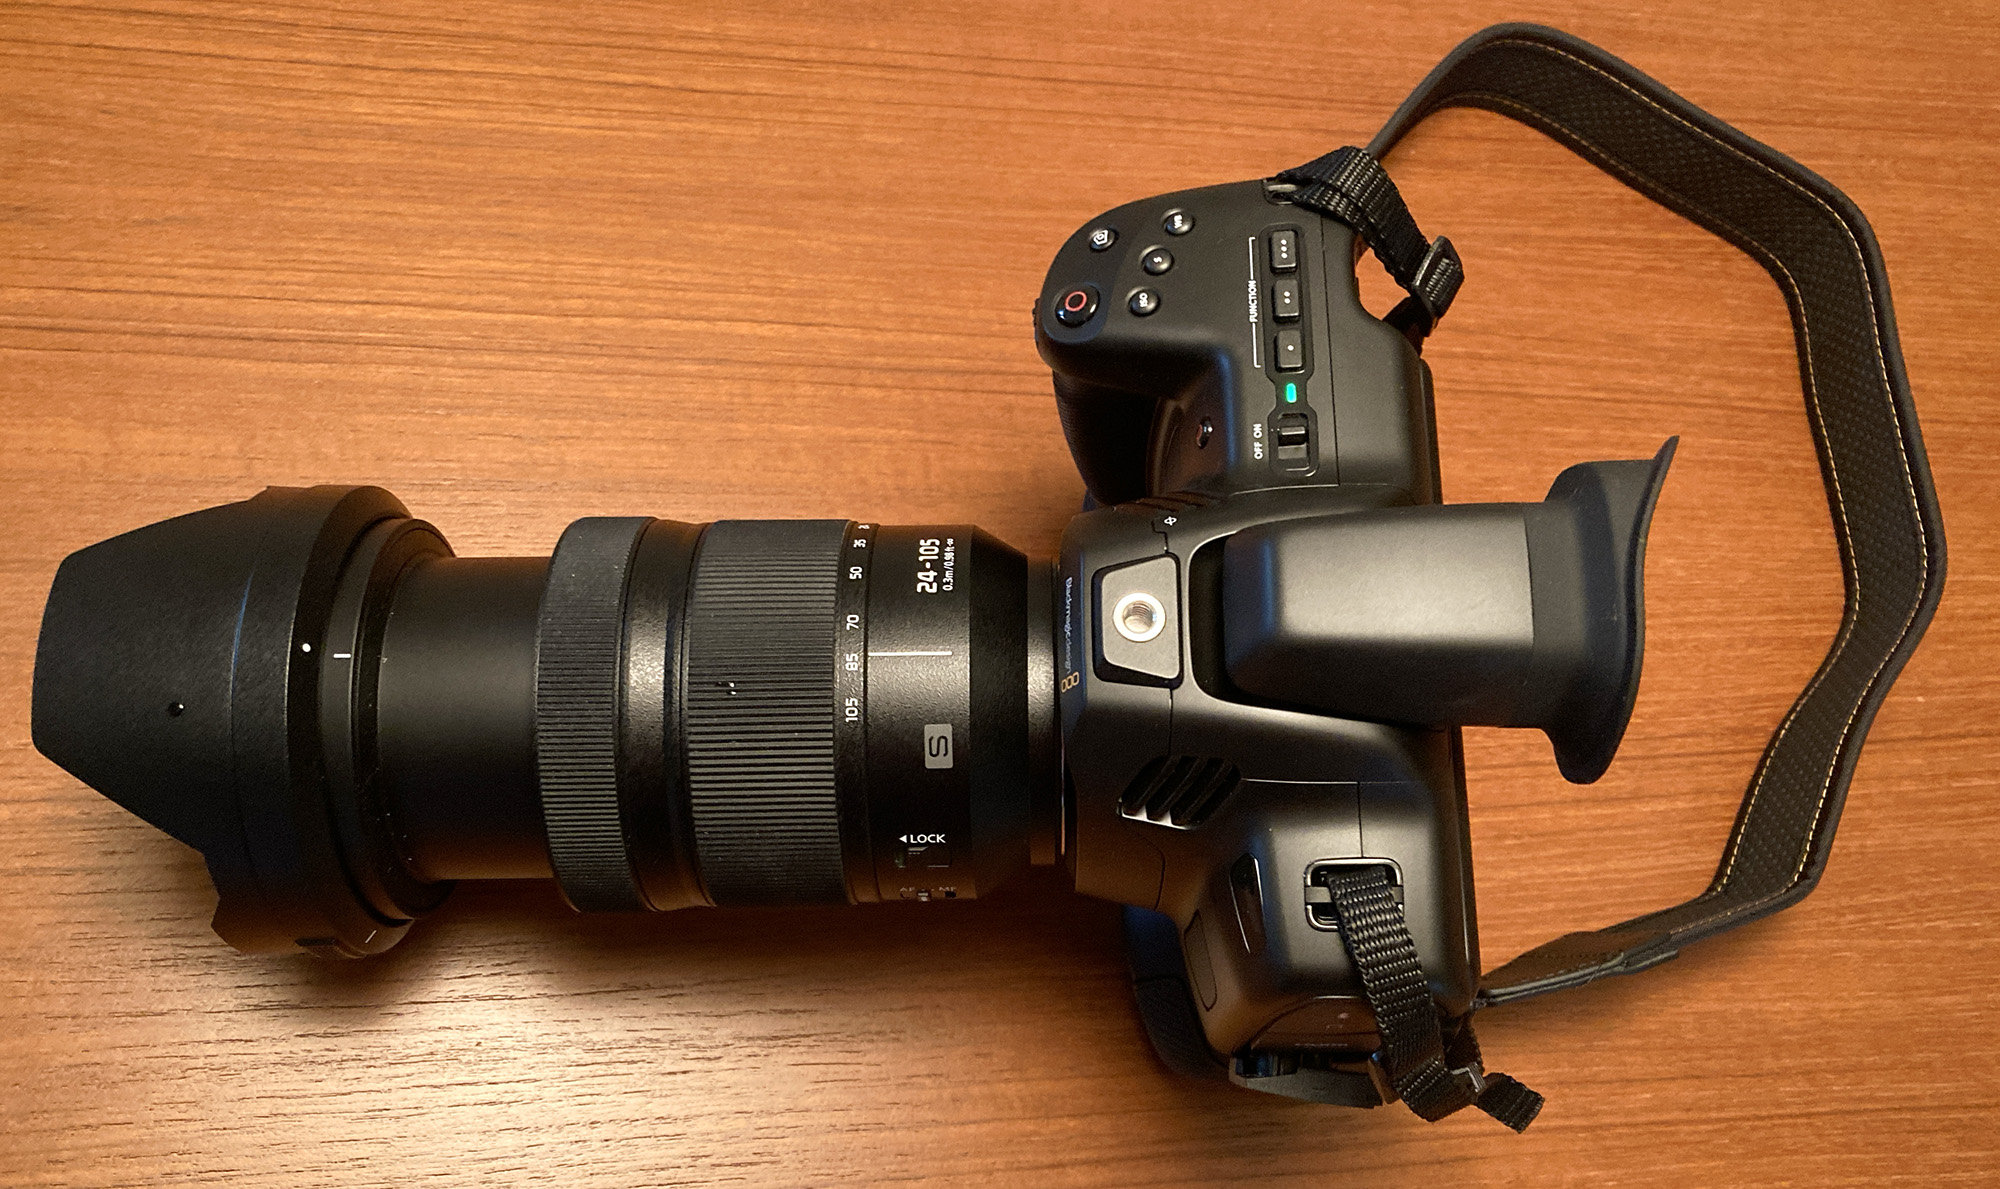 Review: Blackmagic Cinema Camera 6K - Blackmagic Design Expands Its Cinema Camera Lineup 6